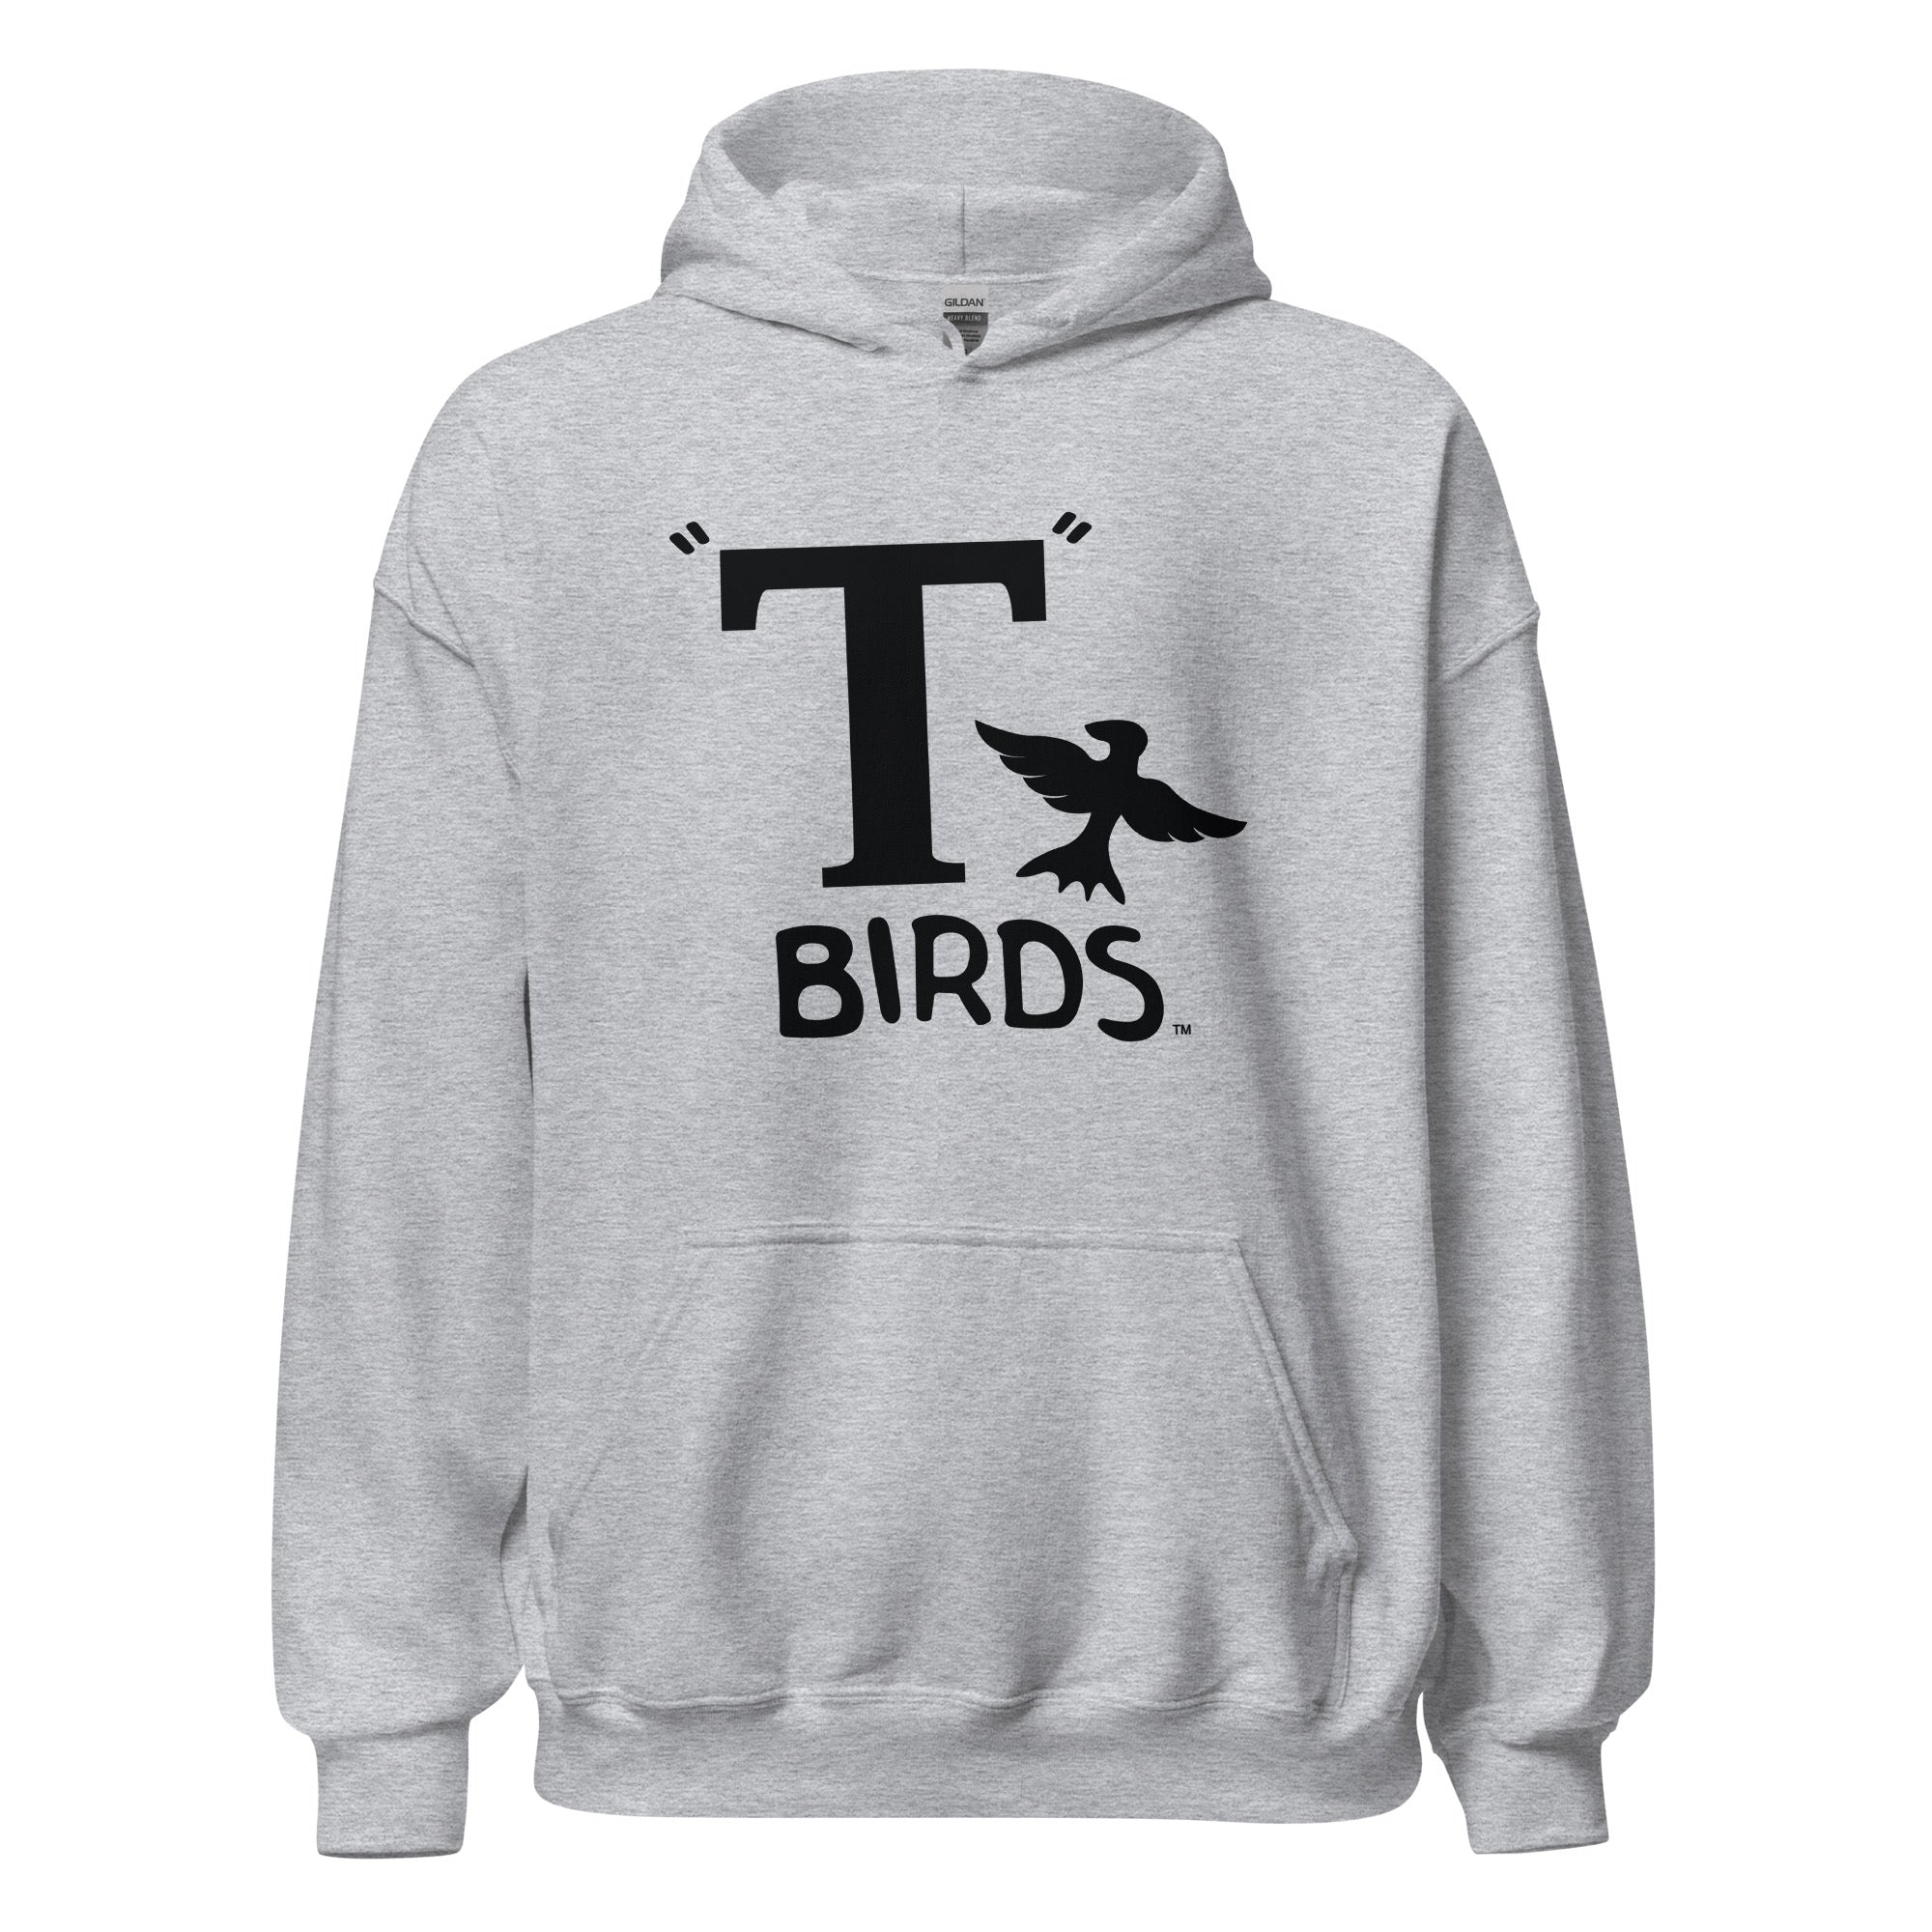 Grease T-Birds Sweatshirt mit Kapuze